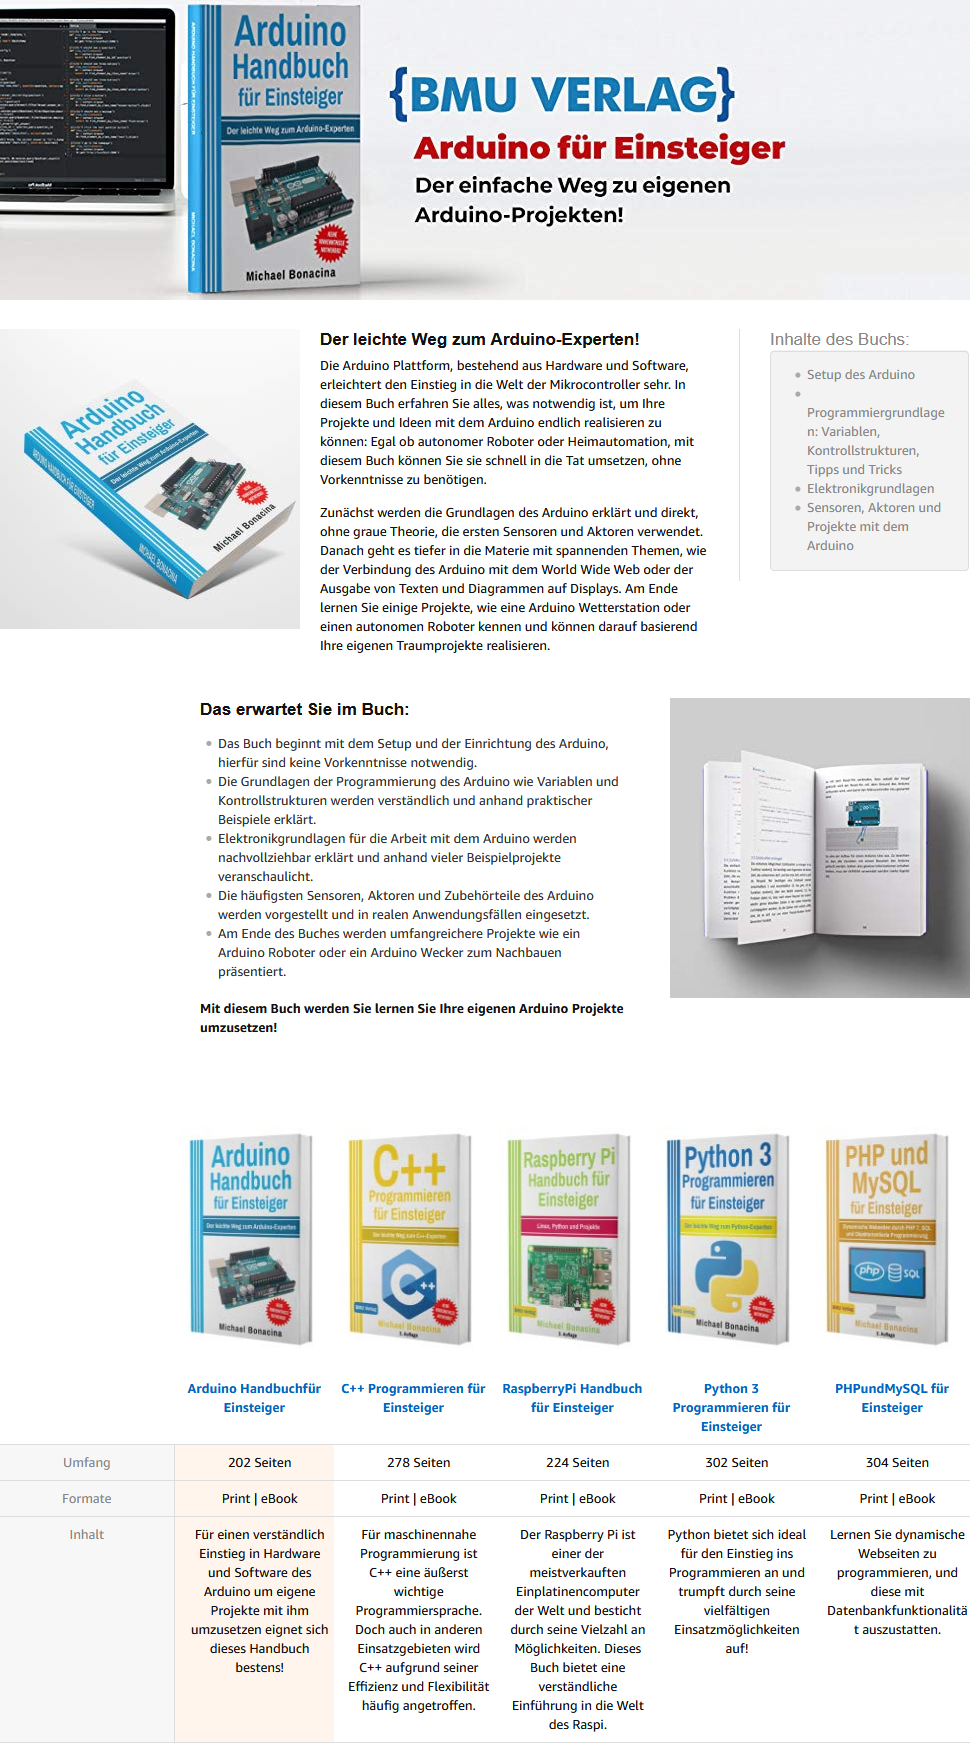 Manual de aprendizaje de programación Arduino para principiantes Michael Bonacina BMU Verlag libro superventas